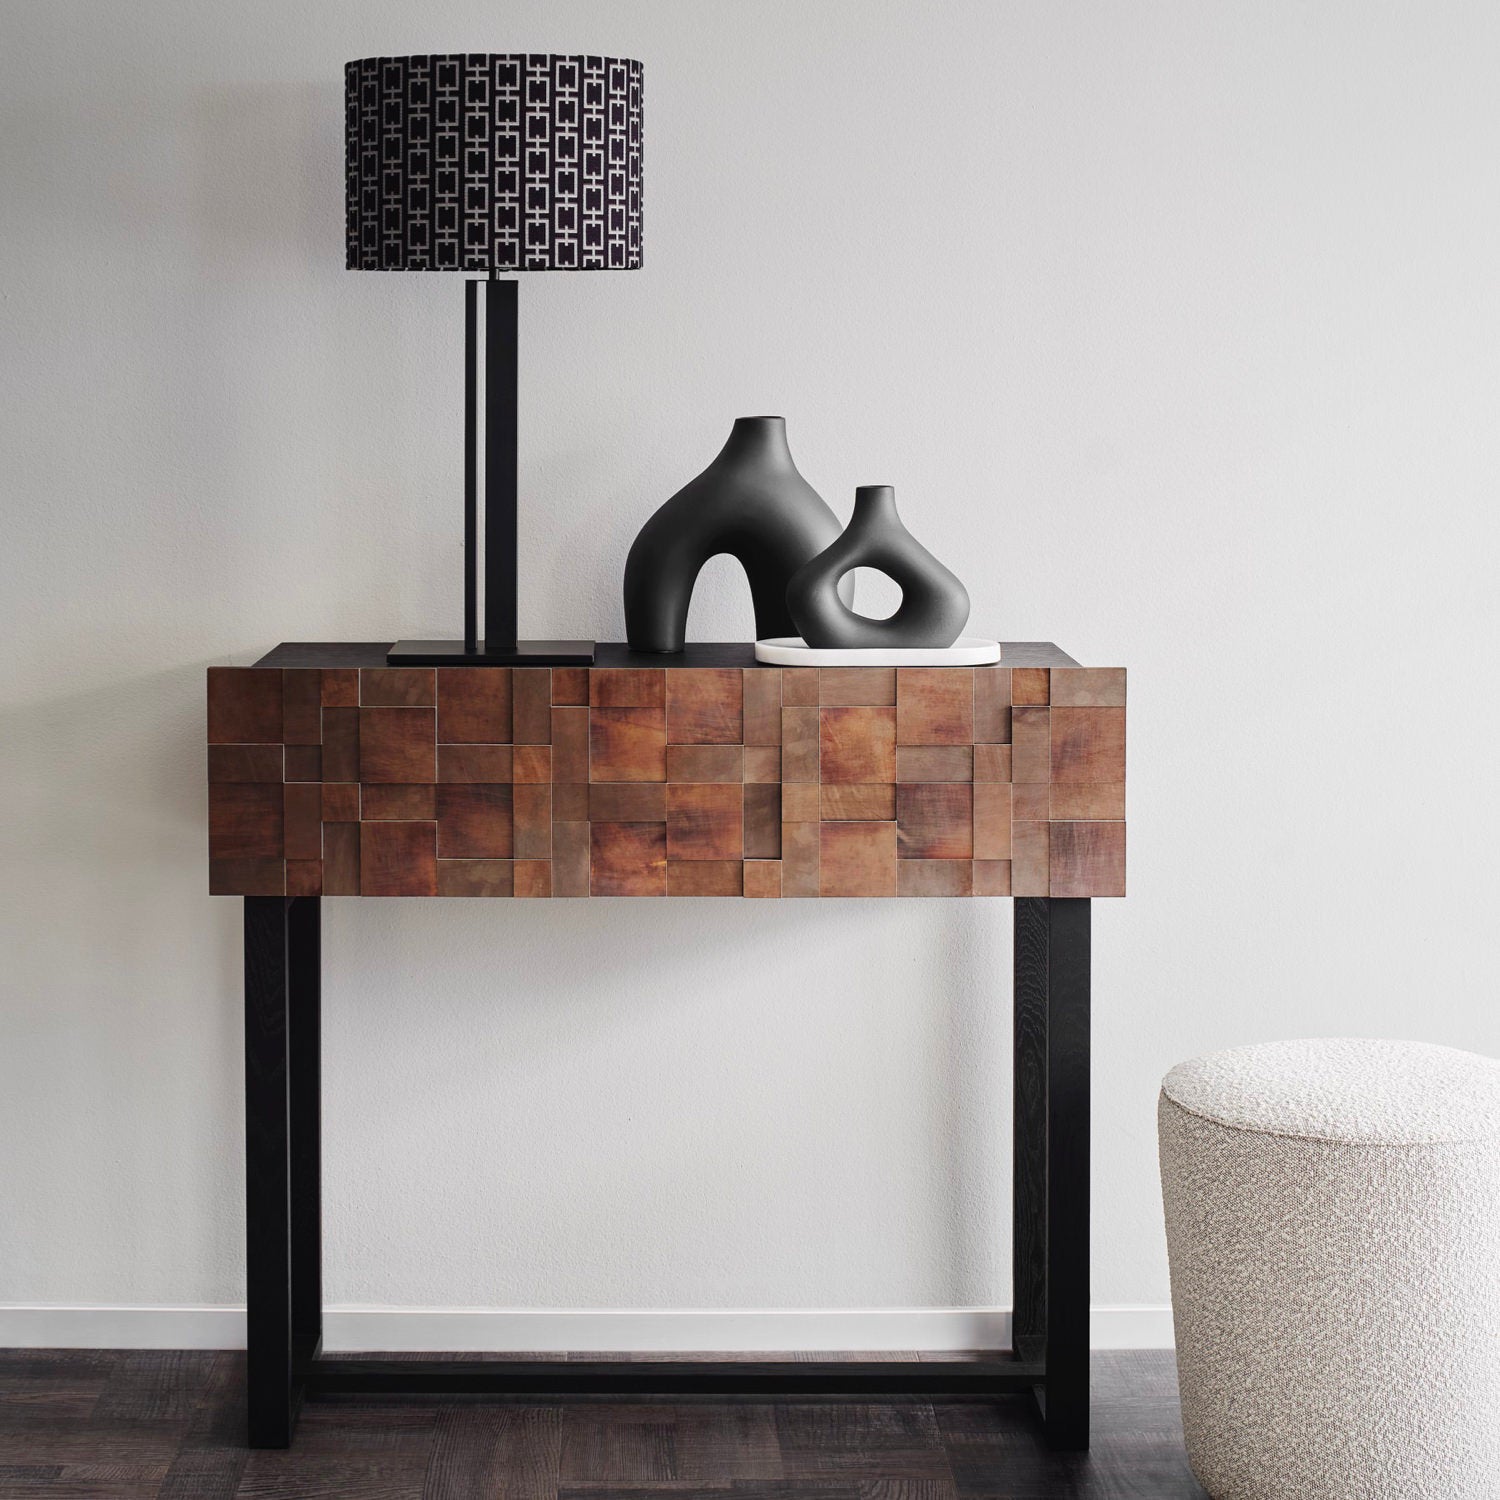 TITUS table lamp by Christine Kröncke Interior Design